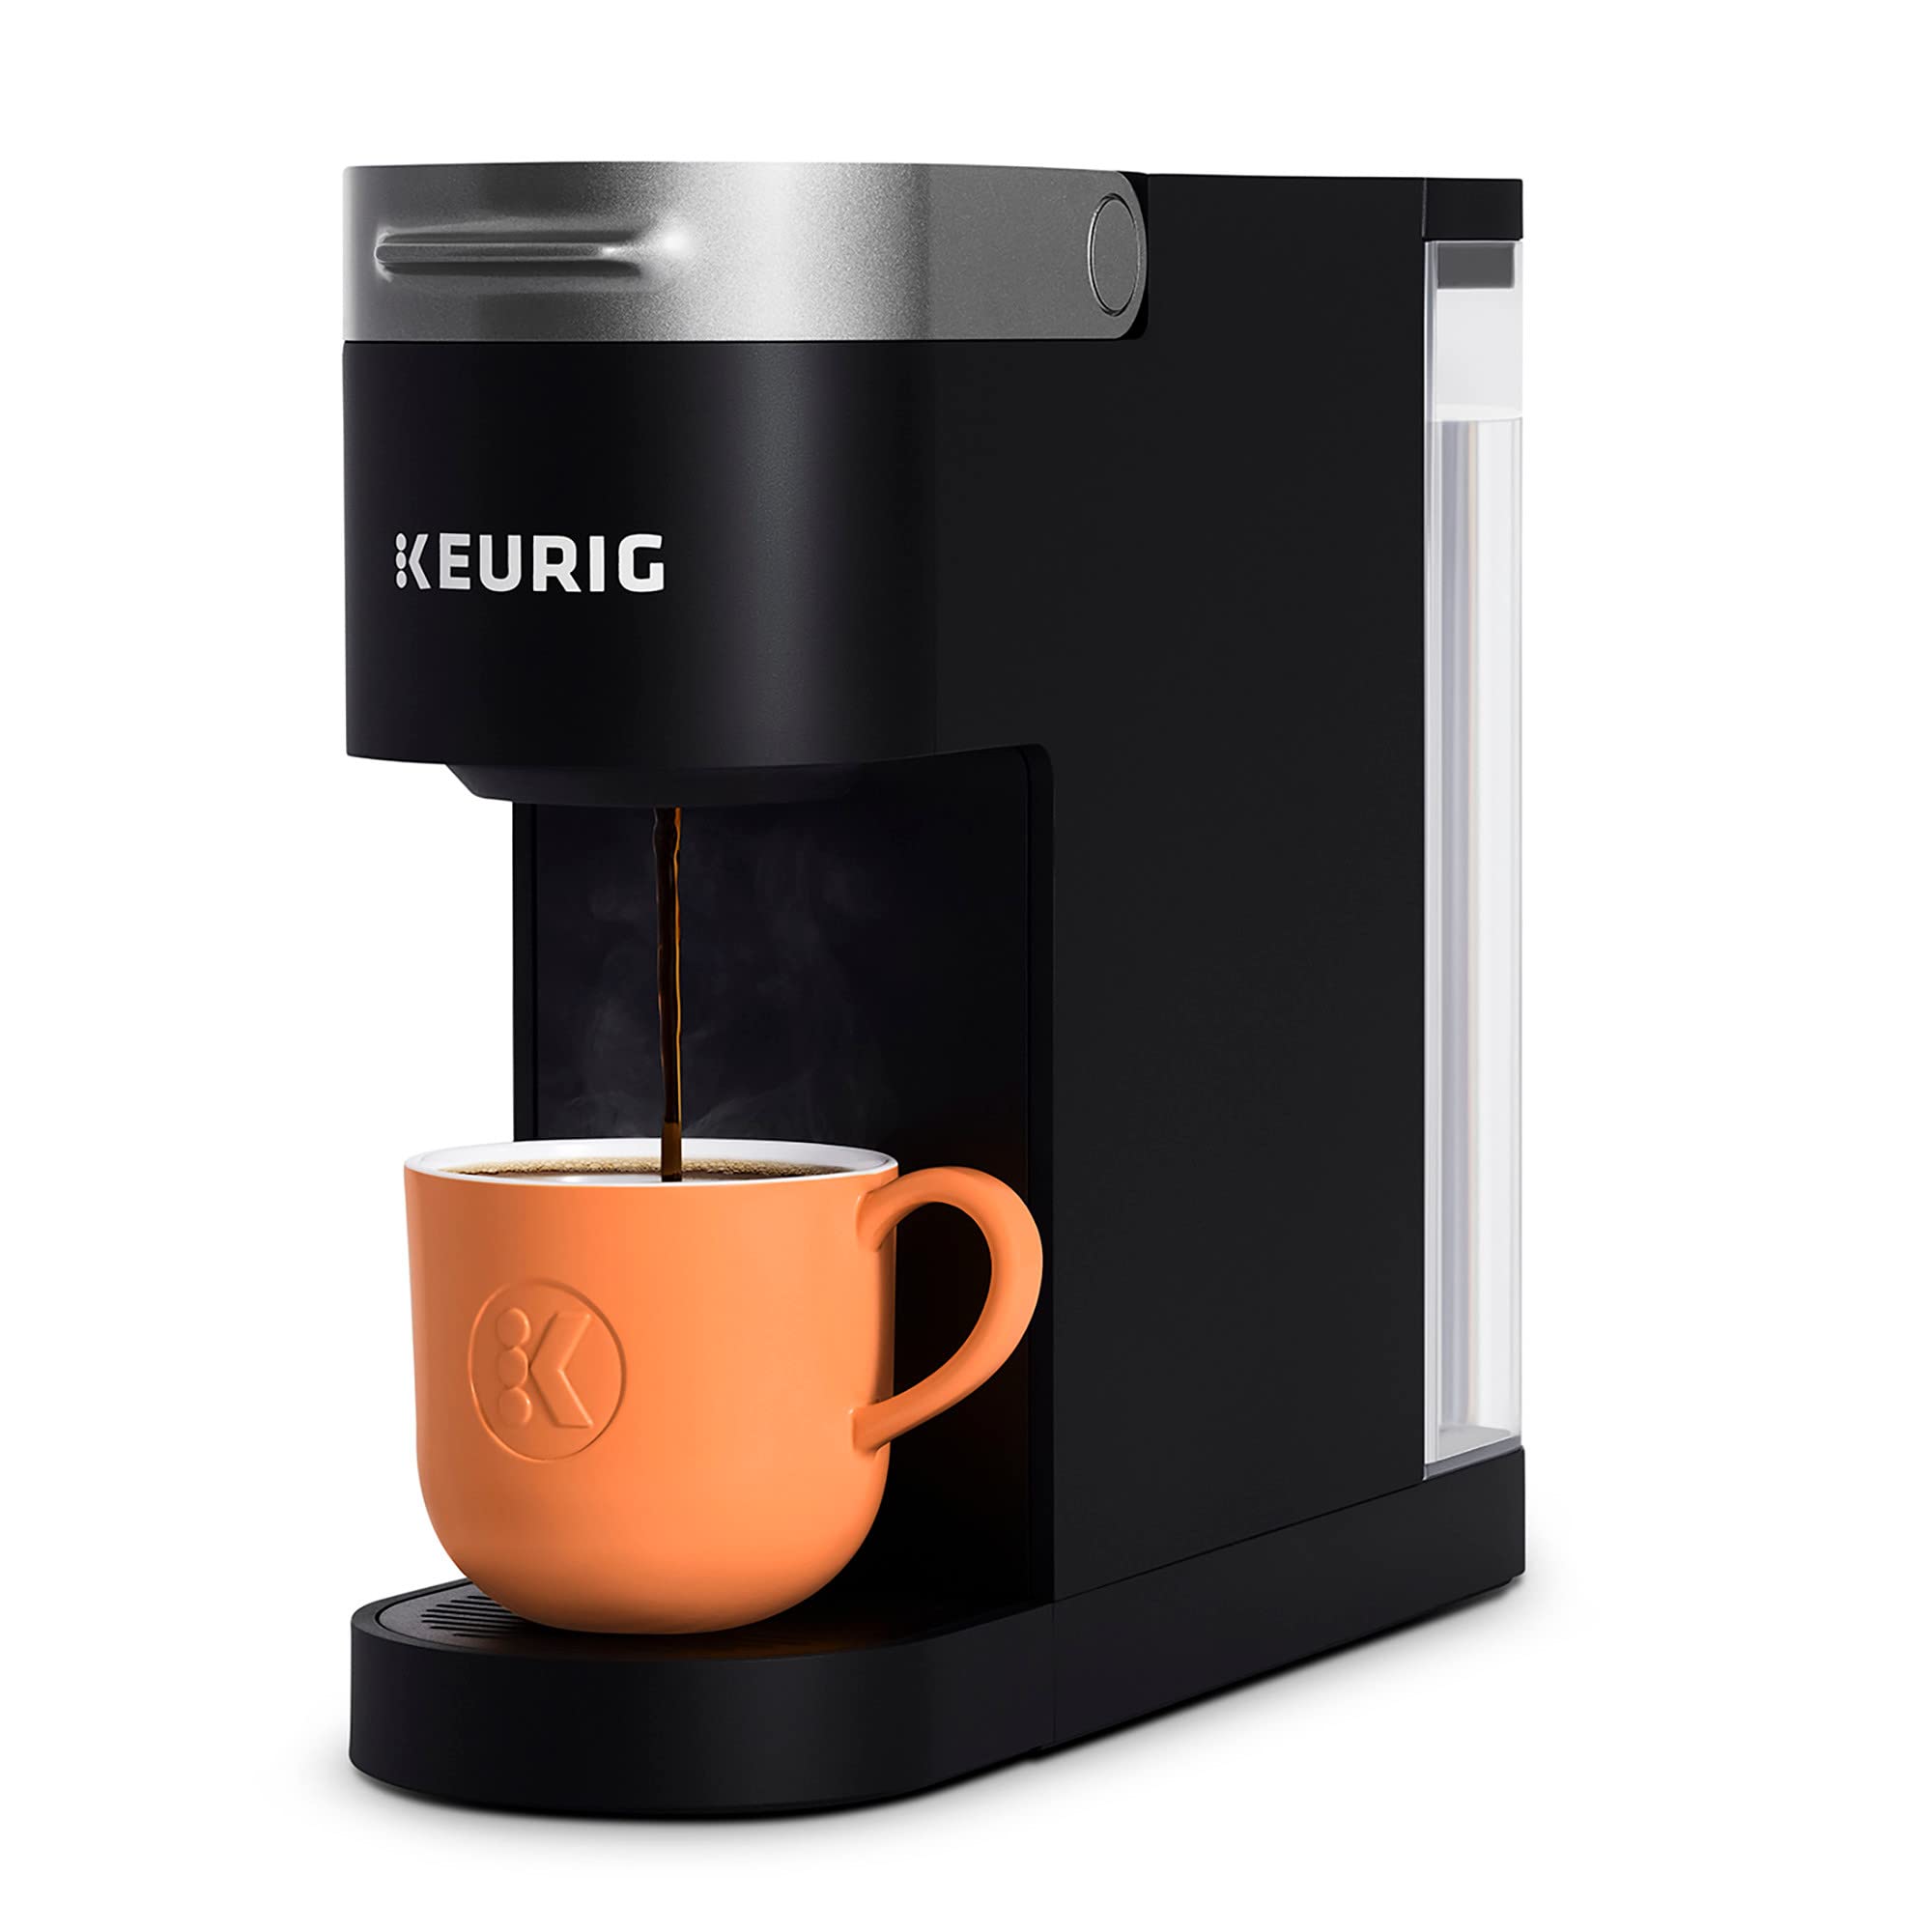 Keurig K-スリムシングルサーブKカップポッドコーヒーメーカー、マルチストリームテクノロジー、ブラック